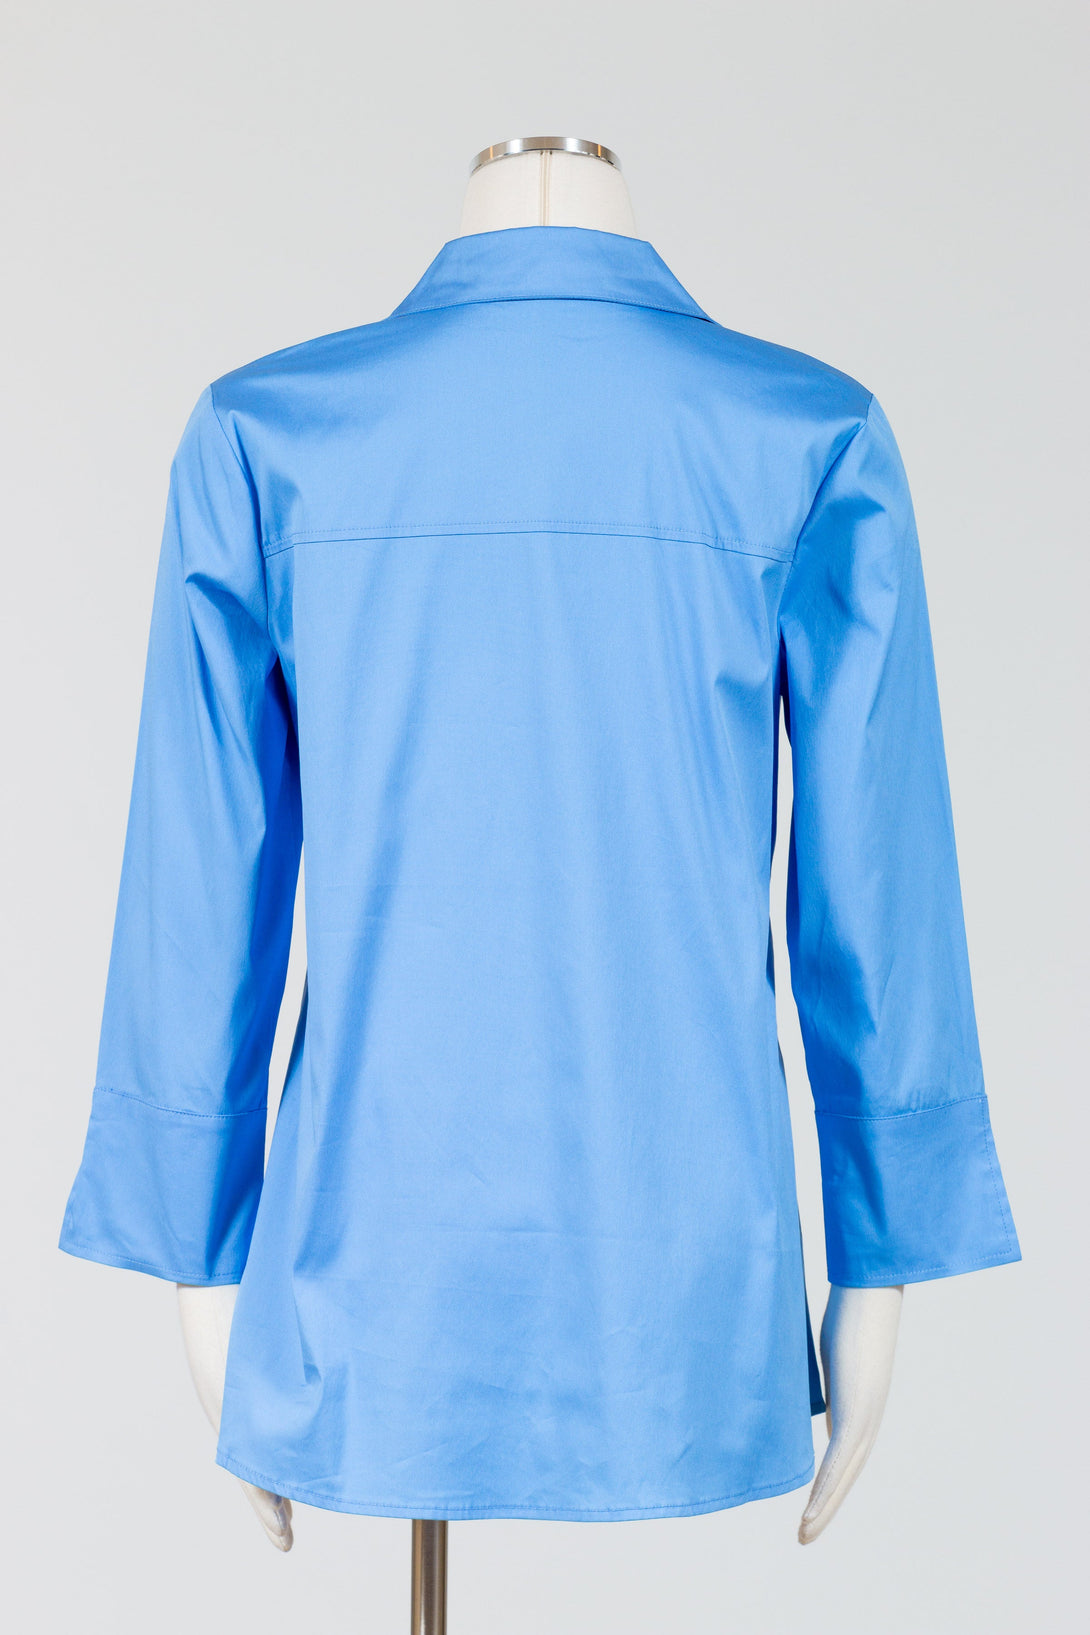 Habitat-TheOne-Shirt-Stretch-Woven-Blue